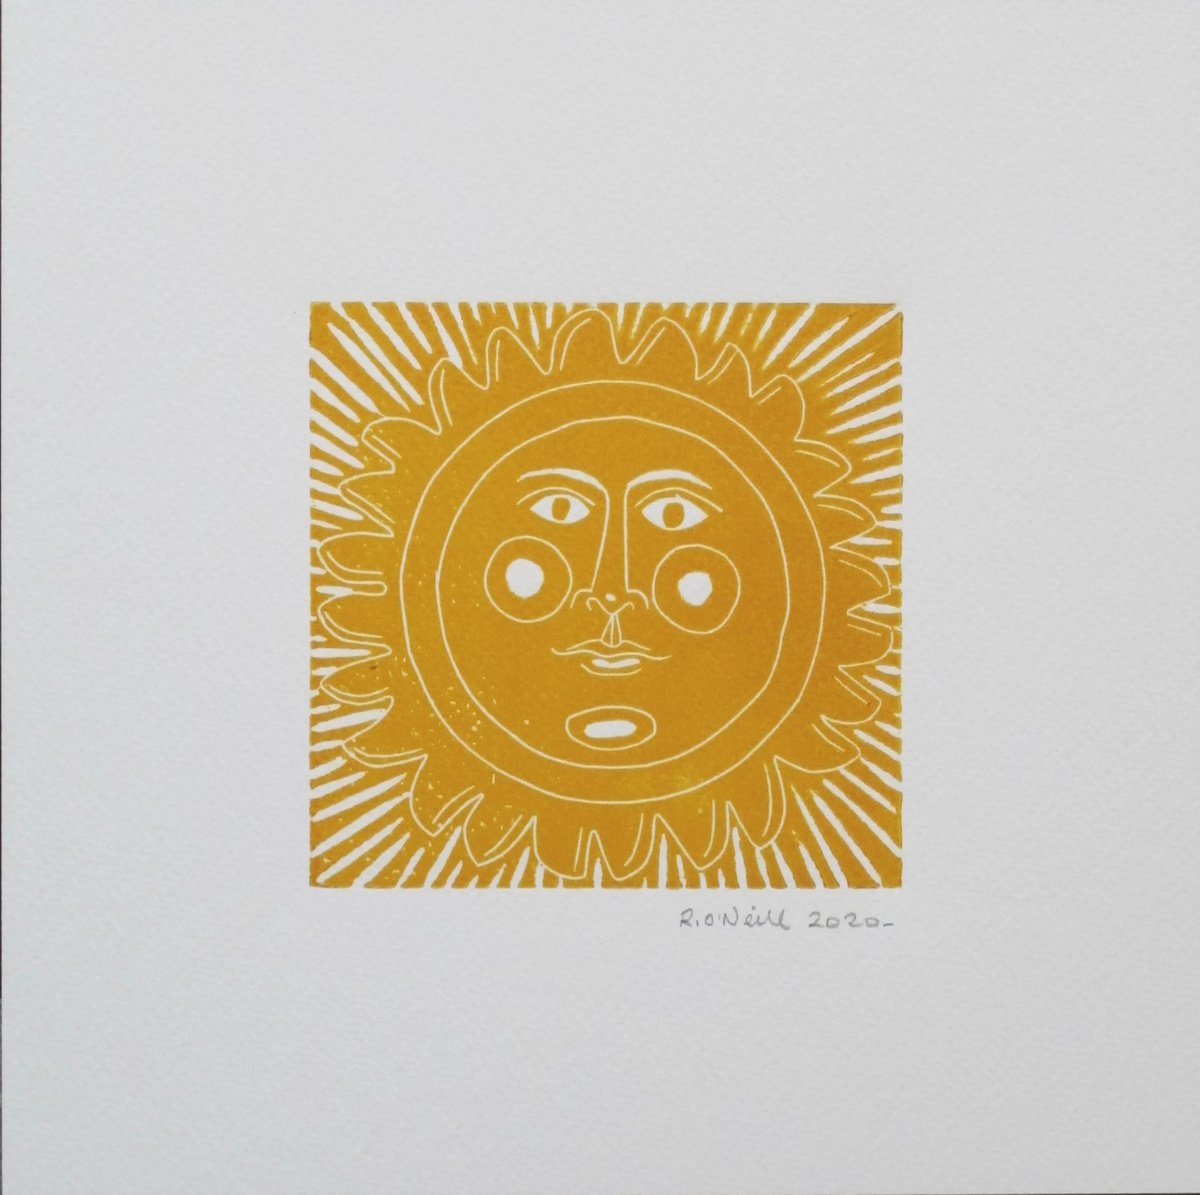 Mr Sunshine by Rory O’Neill